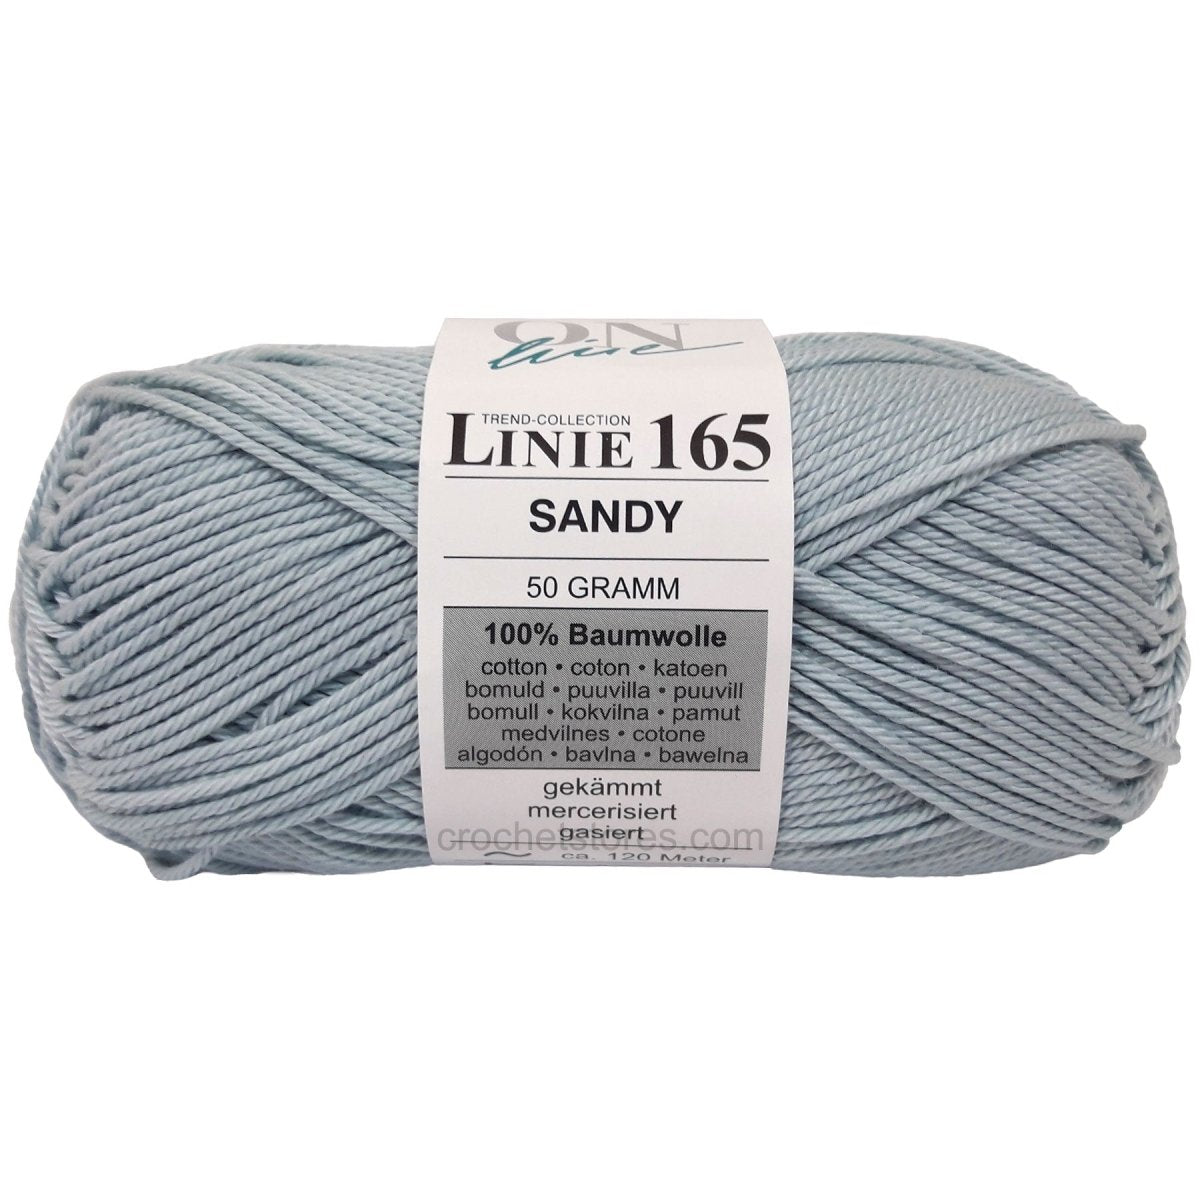 SANDY - Crochetstores110165-02184014366176893